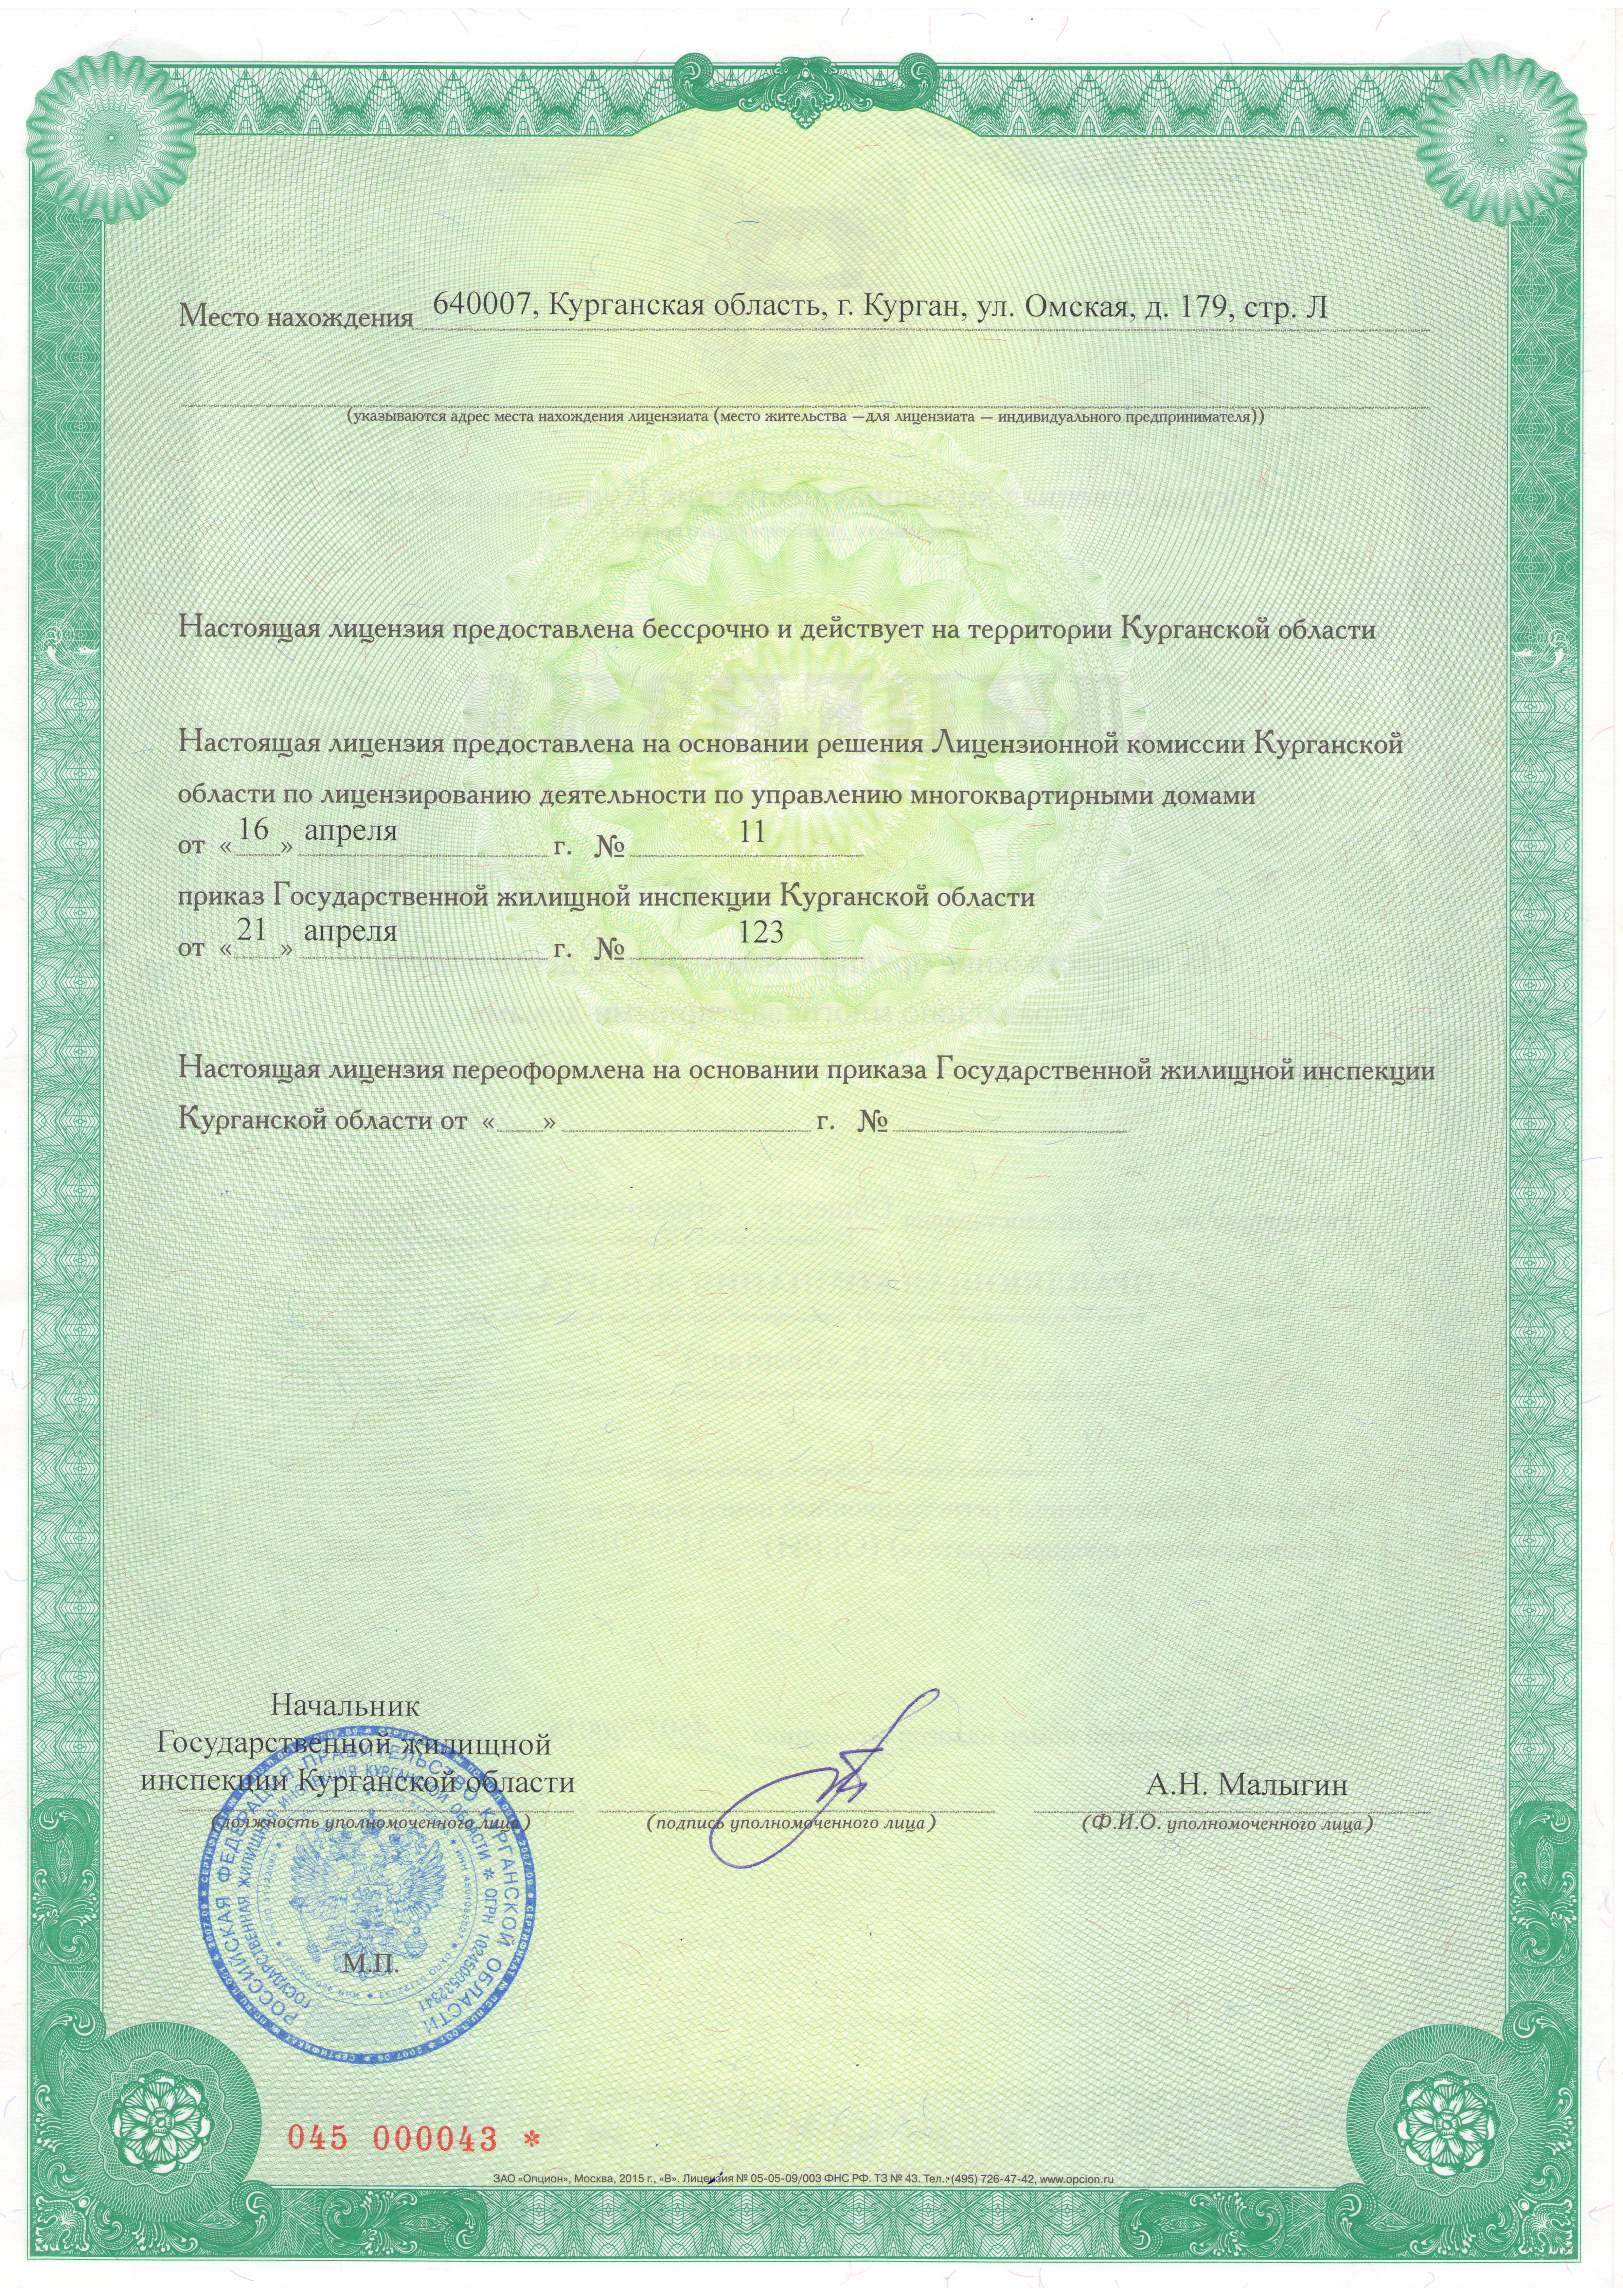 Лицензия на управление МКД №041 от 21.04.2015